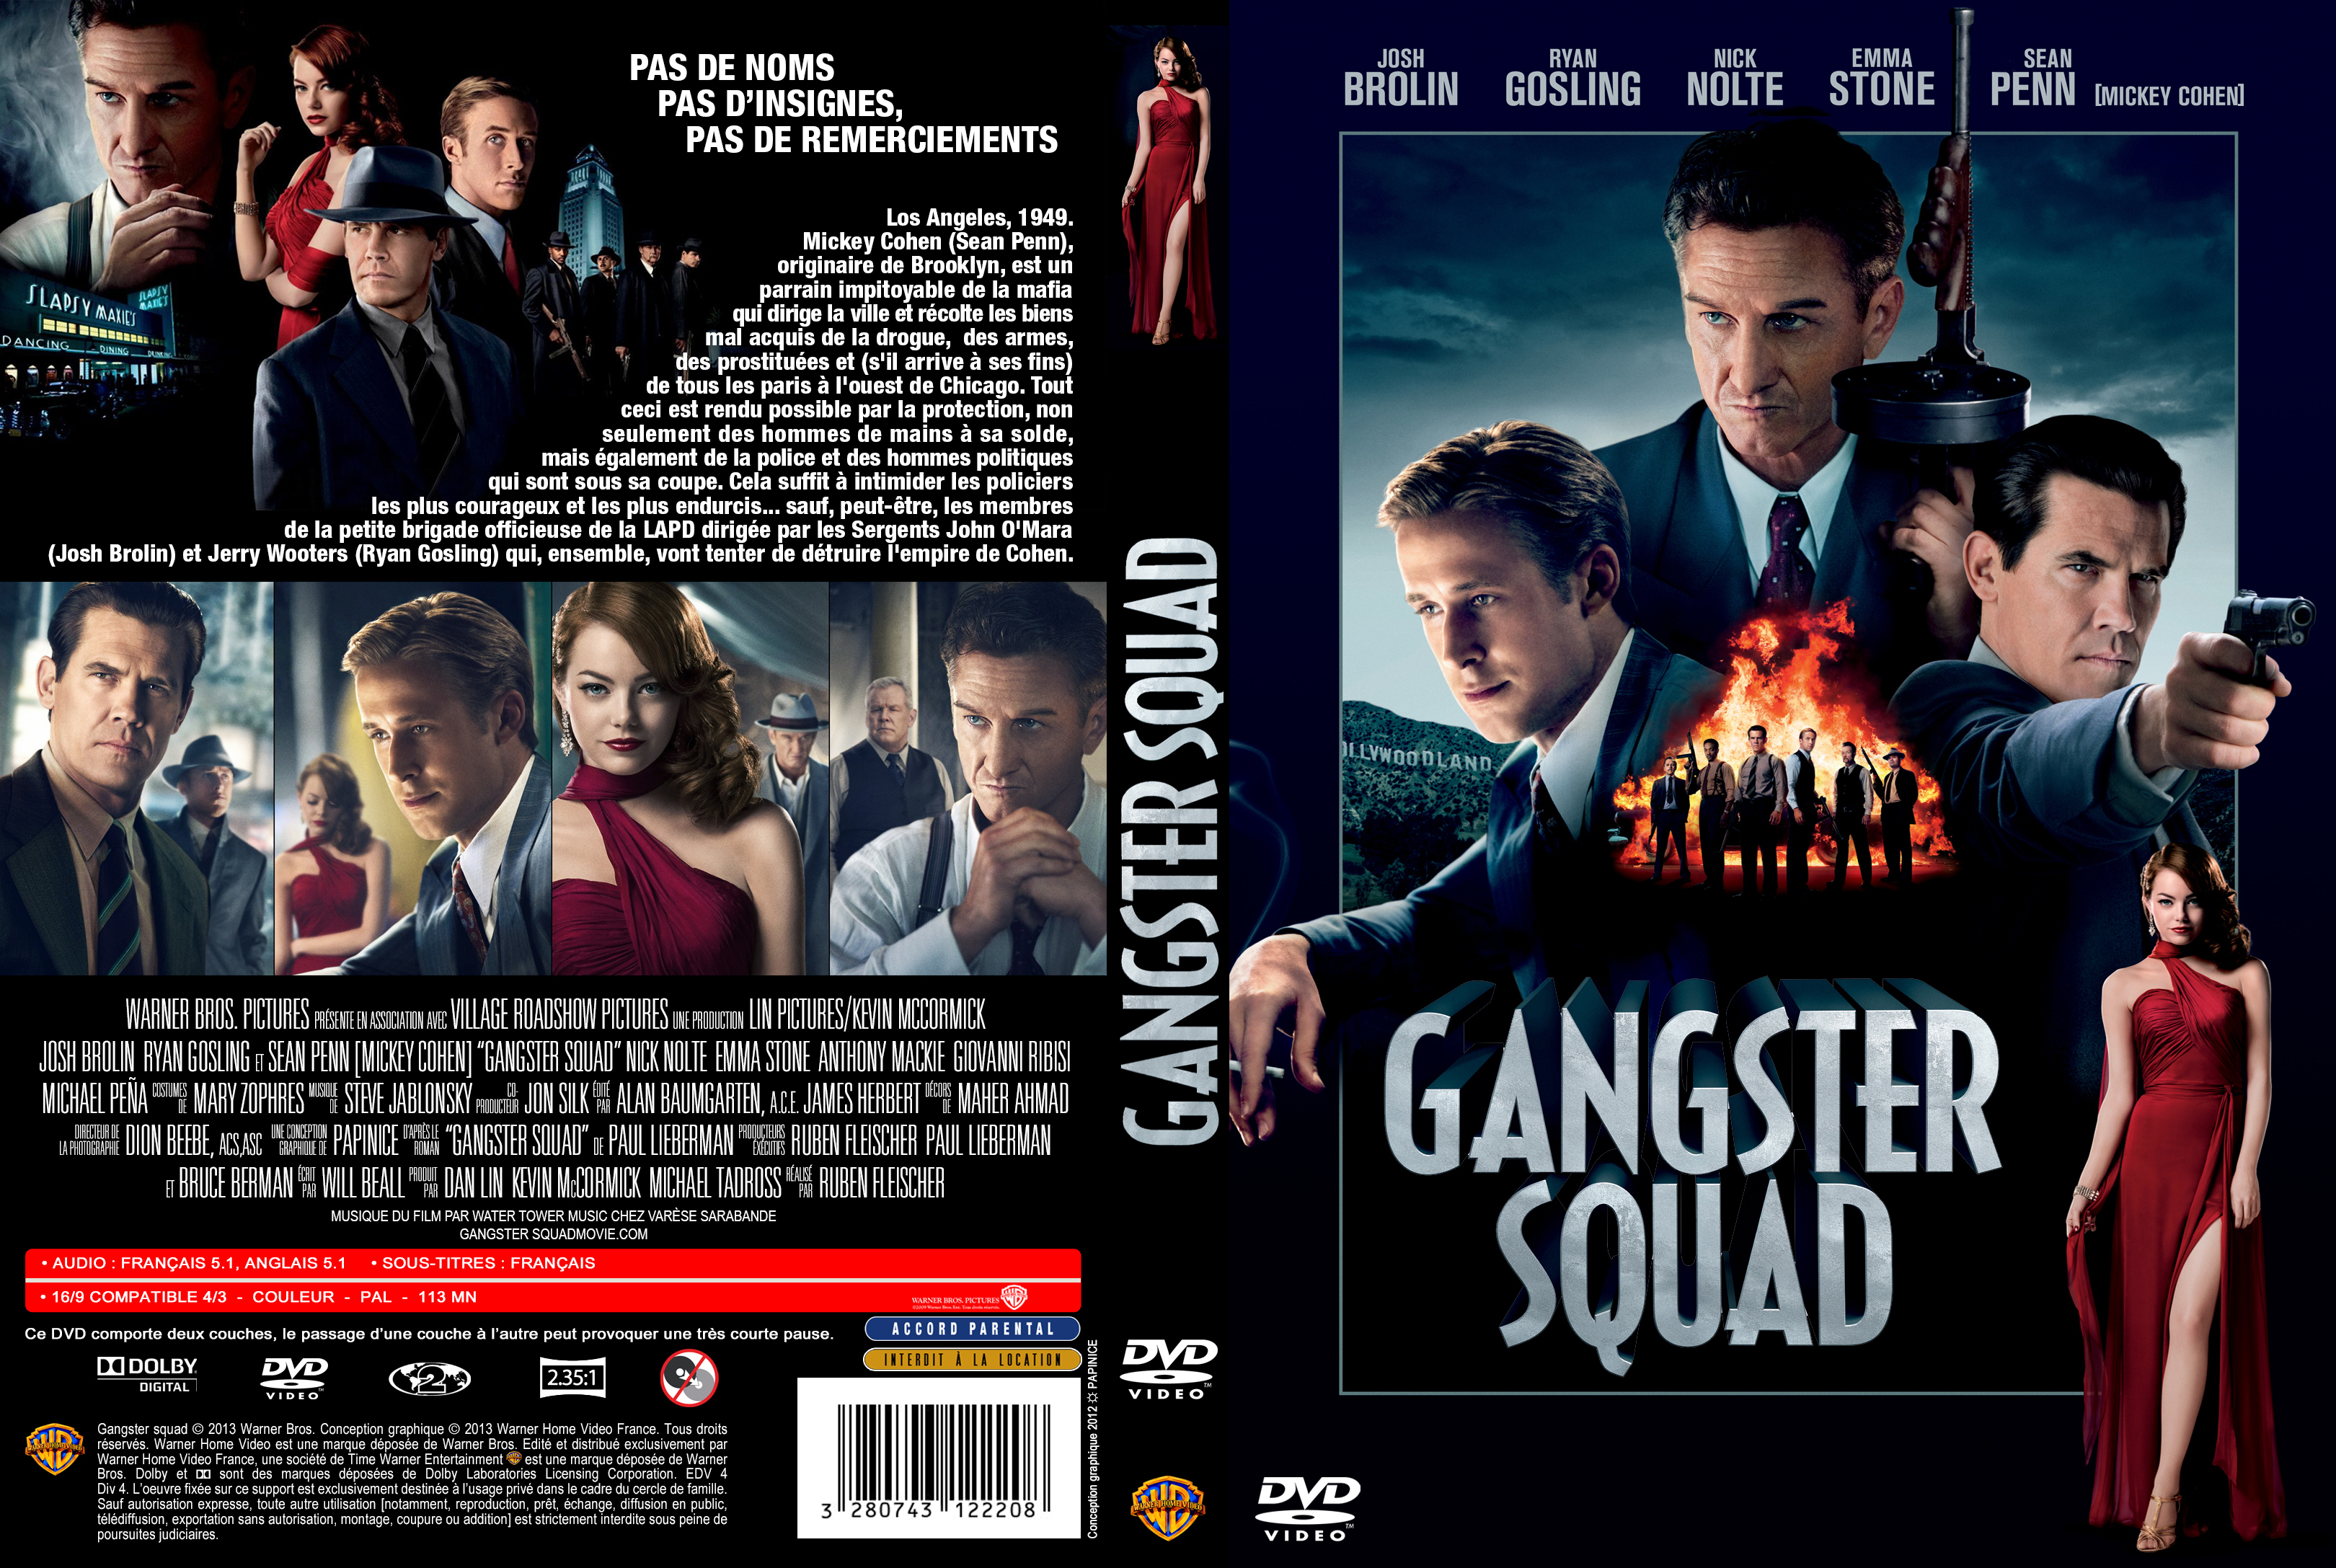 Jaquette DVD Gangster squad custom